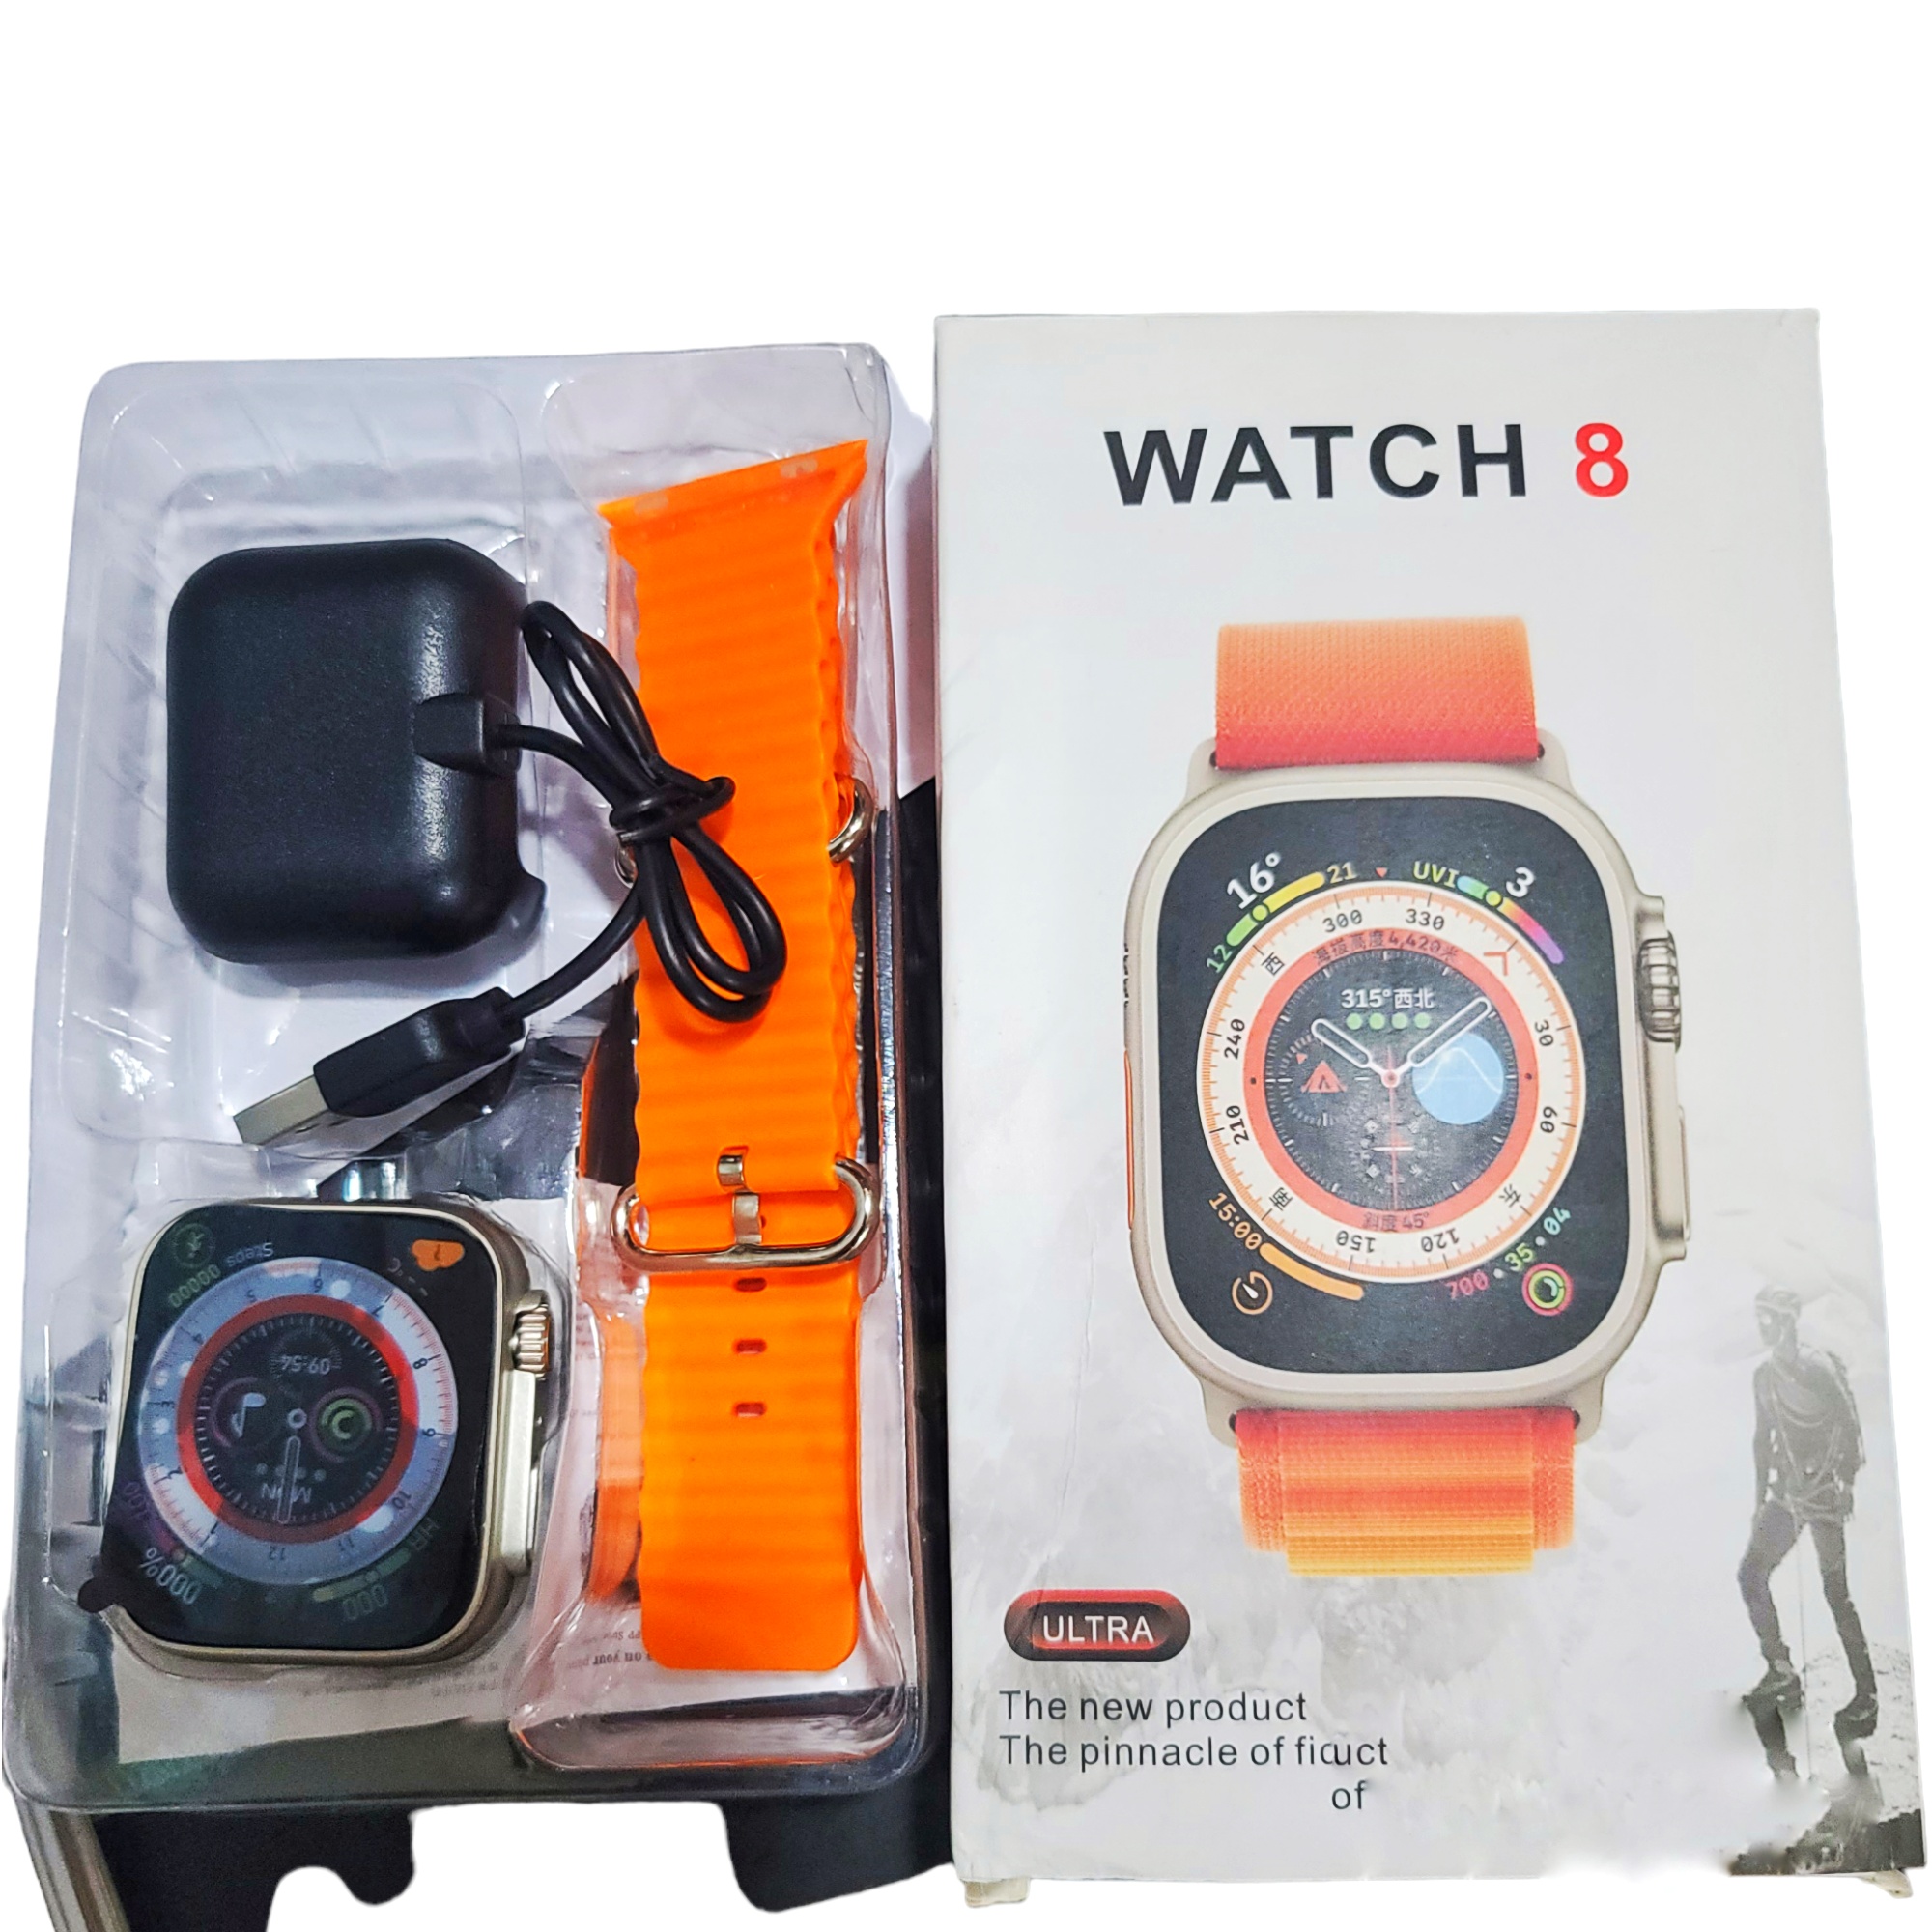 Watch 8 Ultra Men Smart Watch 2.09" HD Screen Bluetooth Calling Pedometer Heart Rate Blood Pressure Sleep Sports Watch for iPhone & Andriod Phone.